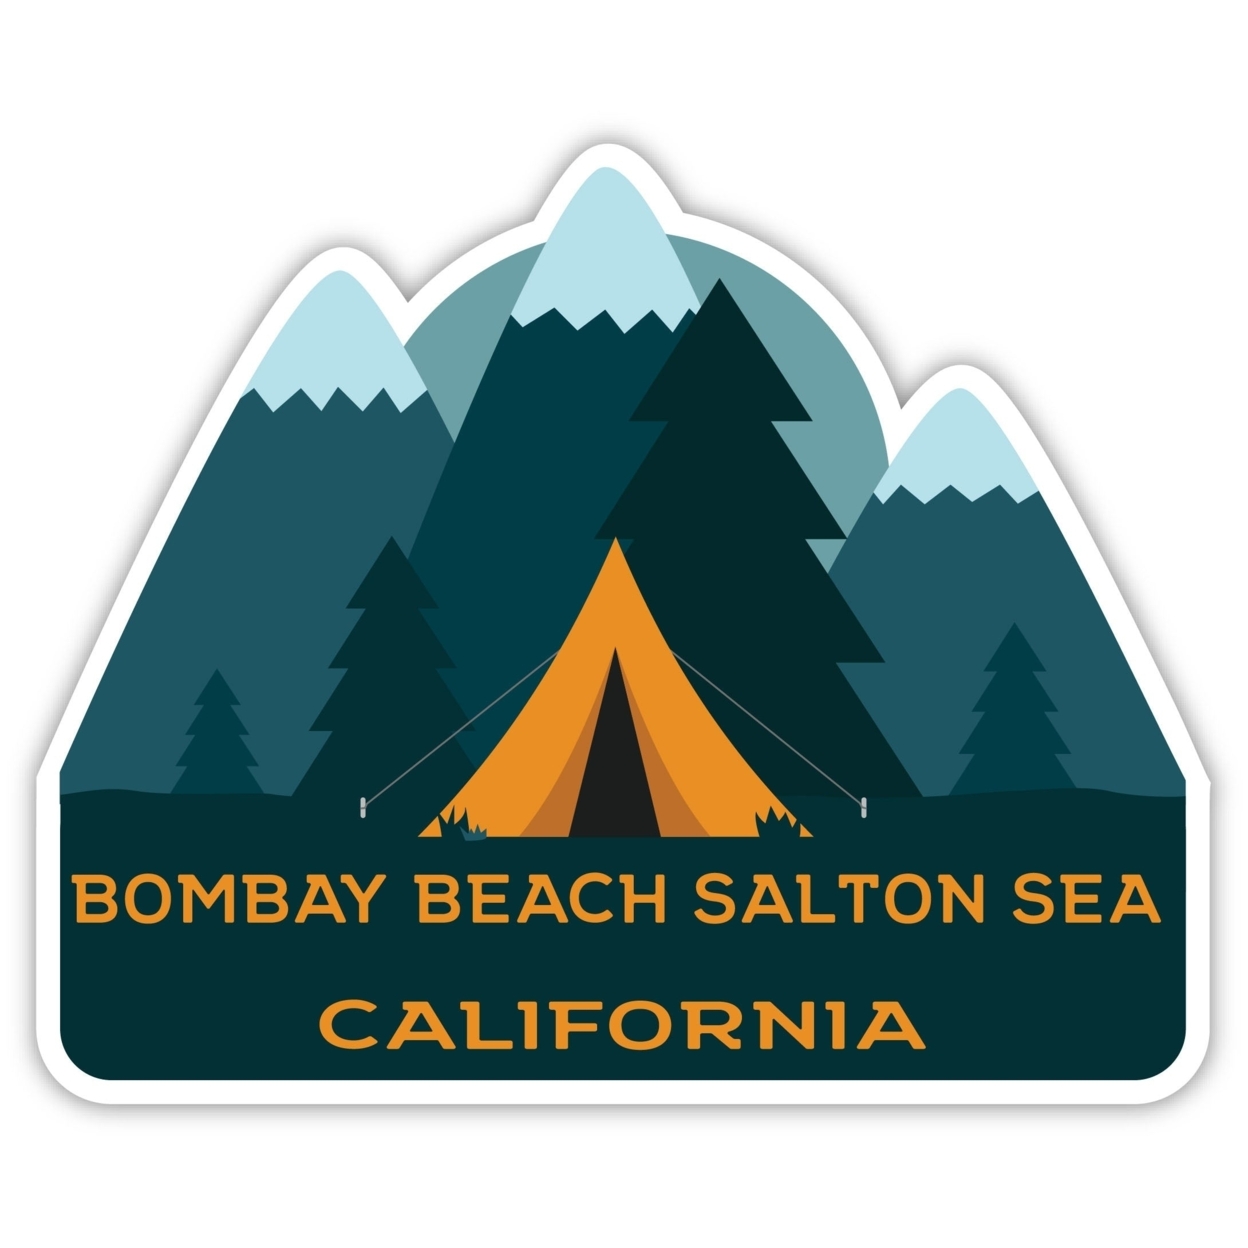 Bombay Beach Salton Sea California Souvenir Decorative Stickers (Choose Theme And Size) - Single Unit, 2-Inch, Camp Life